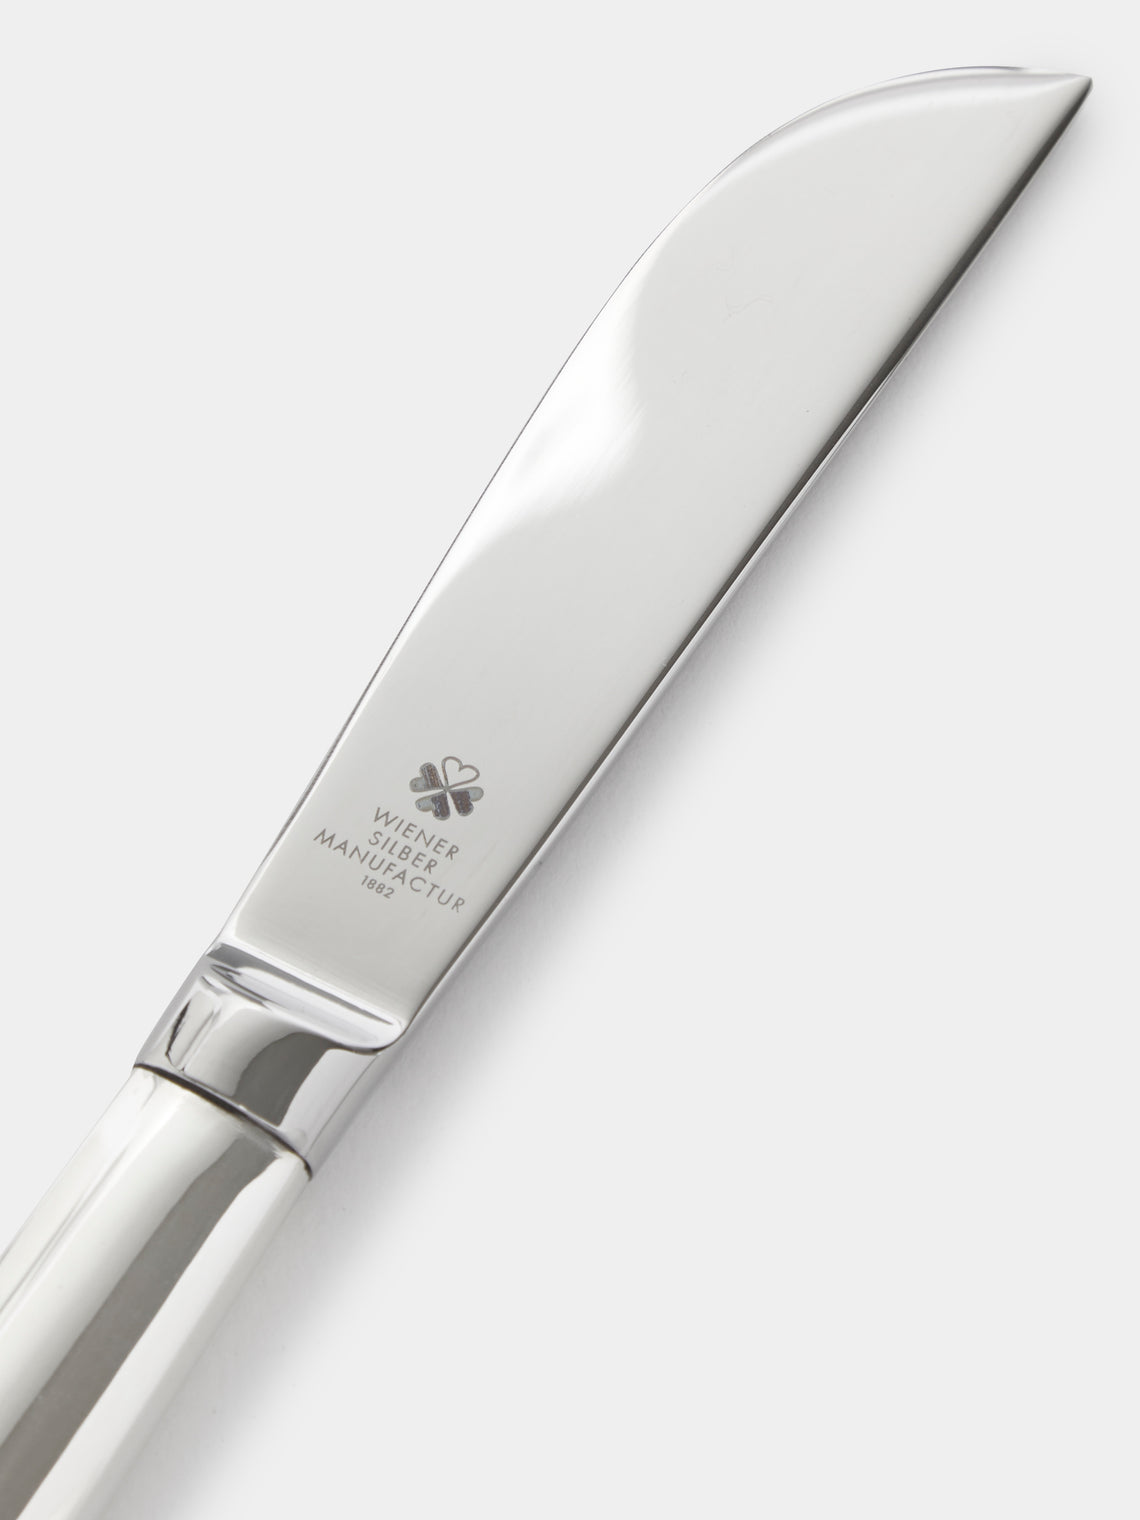 Wiener Silber Manufactur - Josef Hoffmann 135 Silver-Plated Fruit Knife - Silver - ABASK